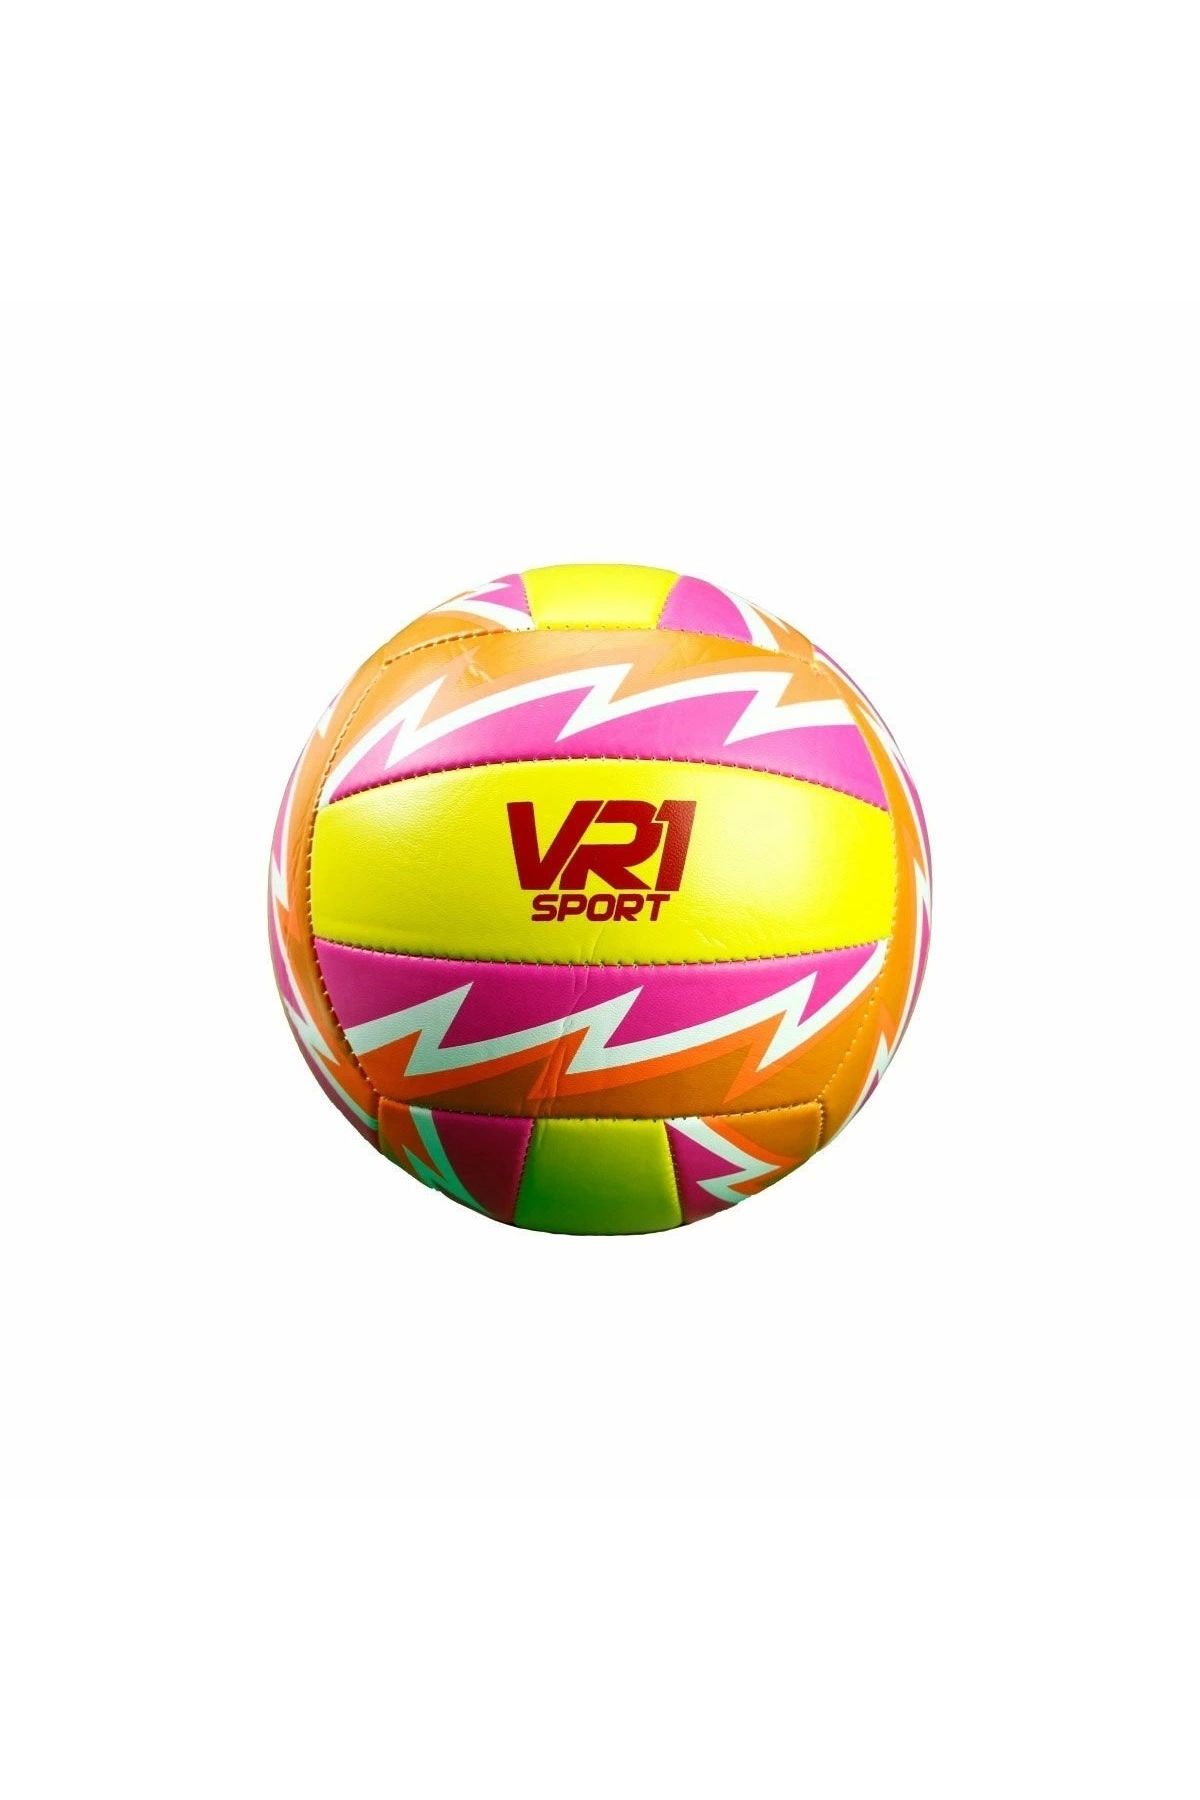 alisverisdevi XL-02 VR1 Sport Voleybol Topu No: 5